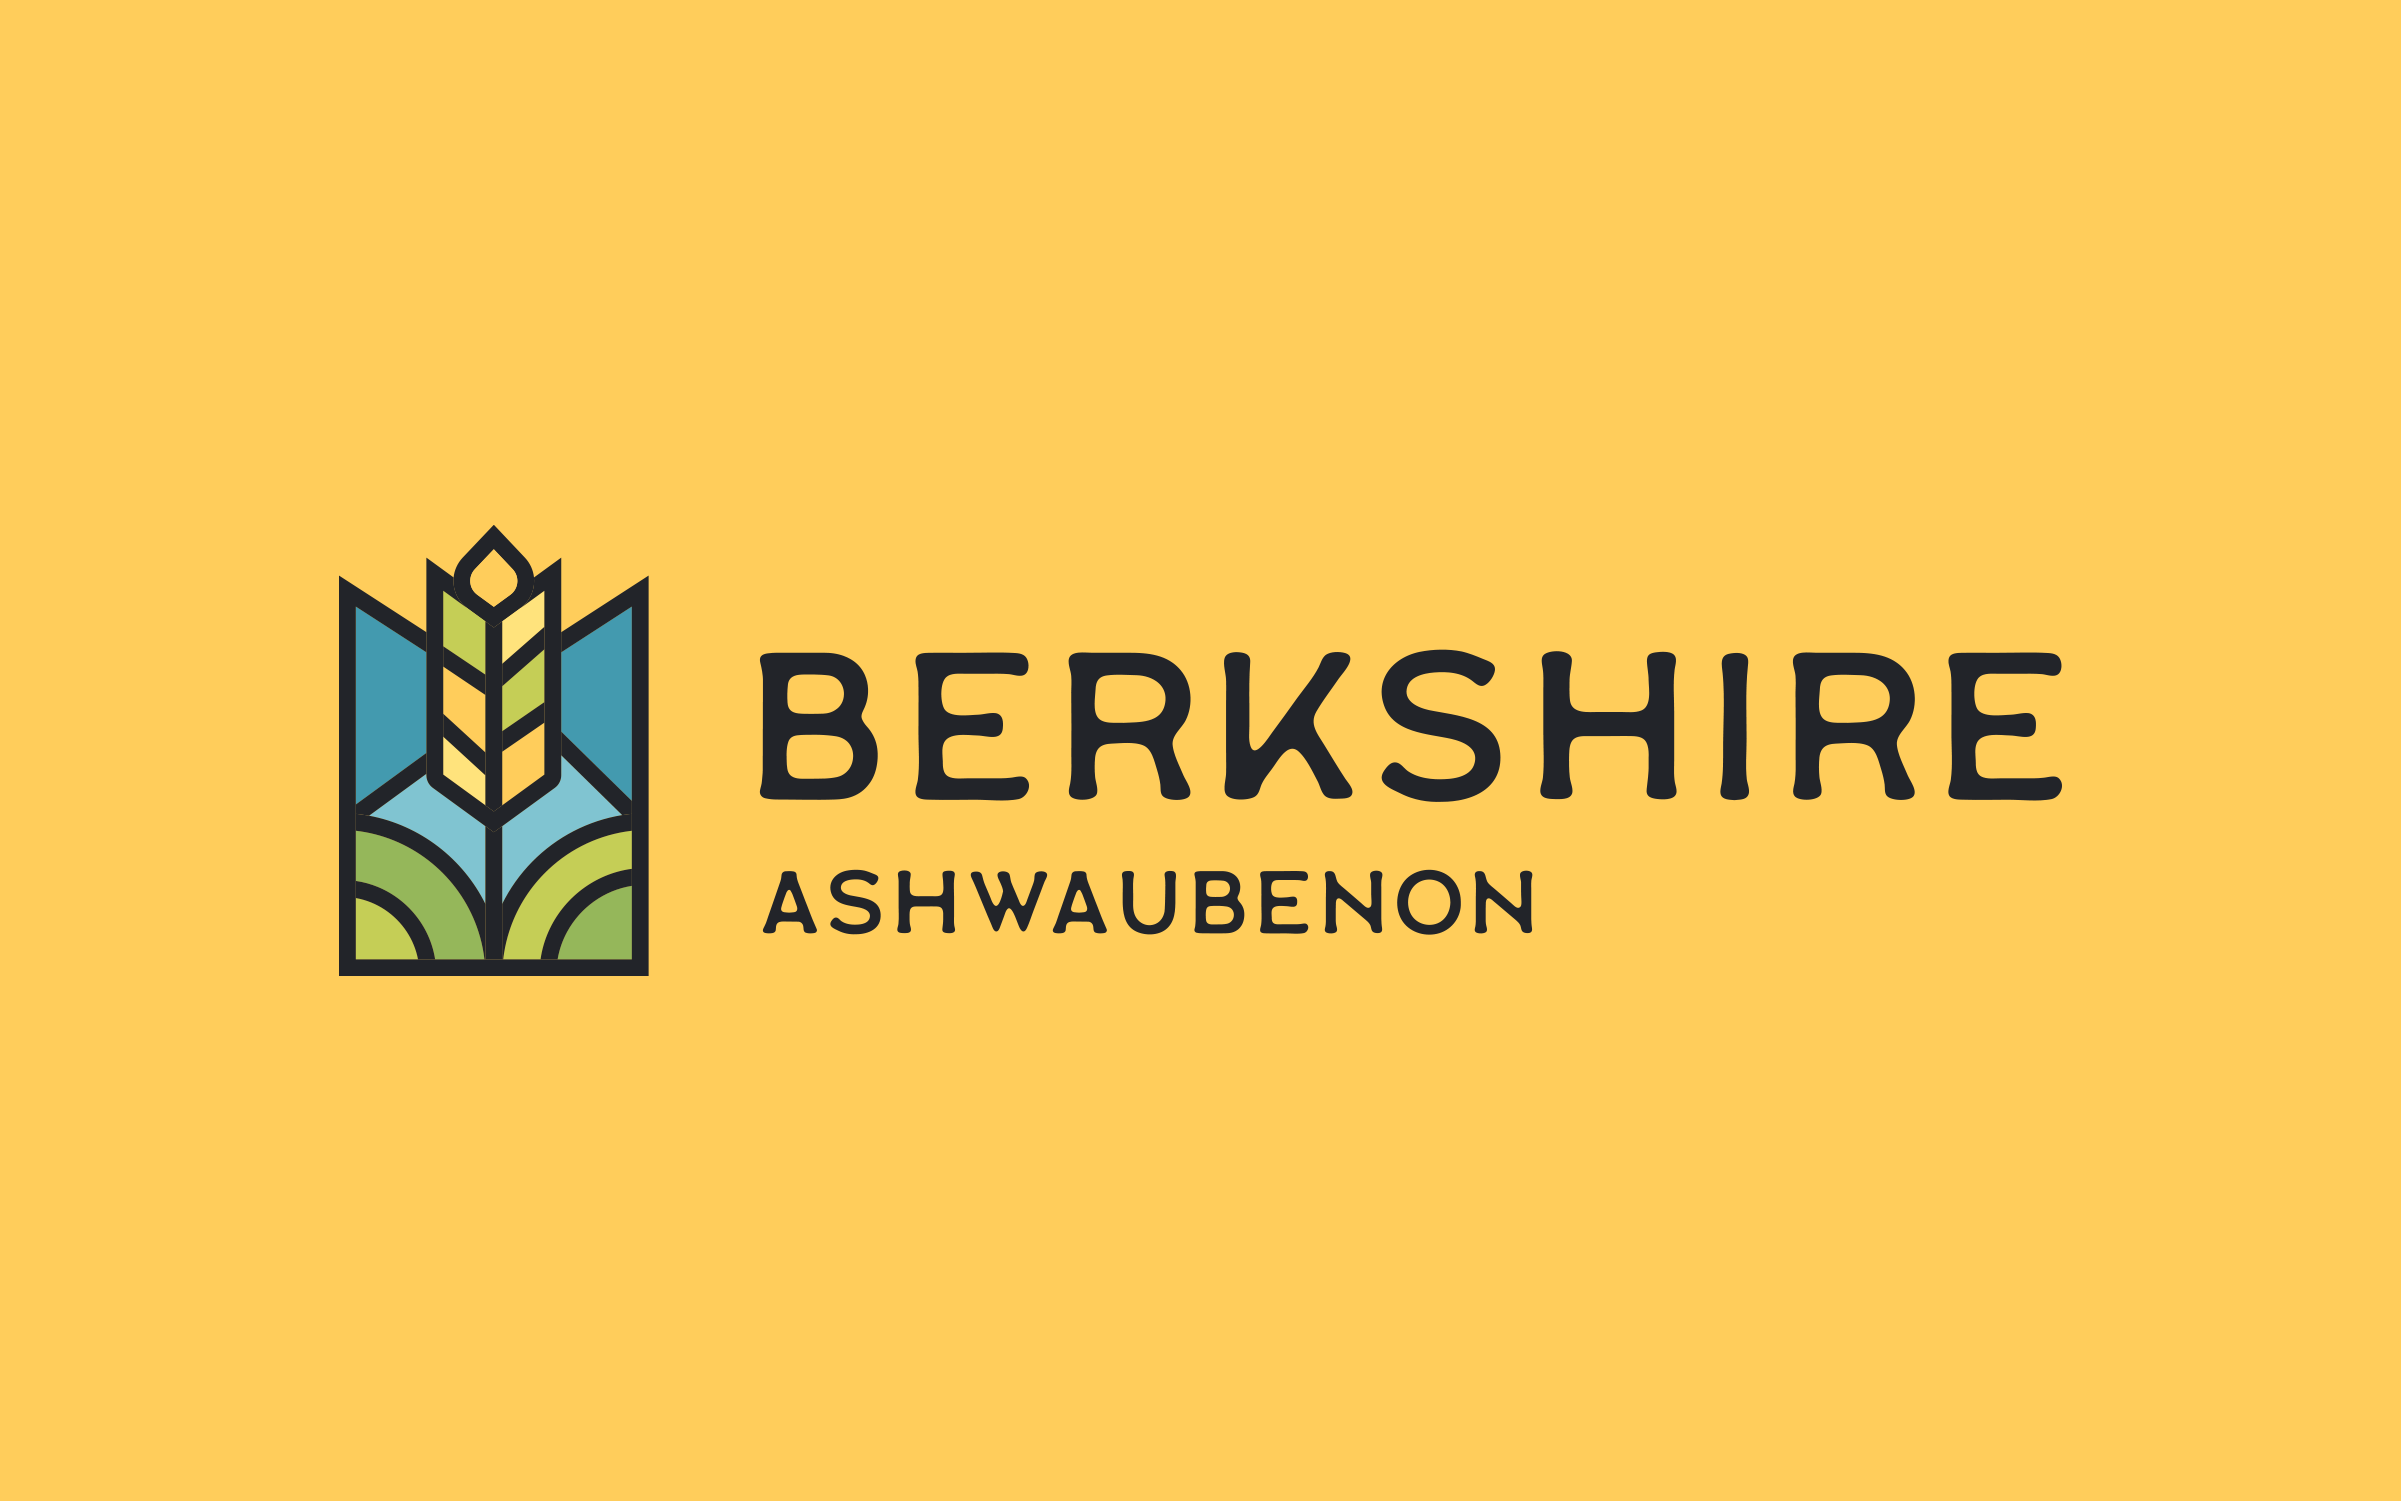 Berkshire-Ashwaubenon logo